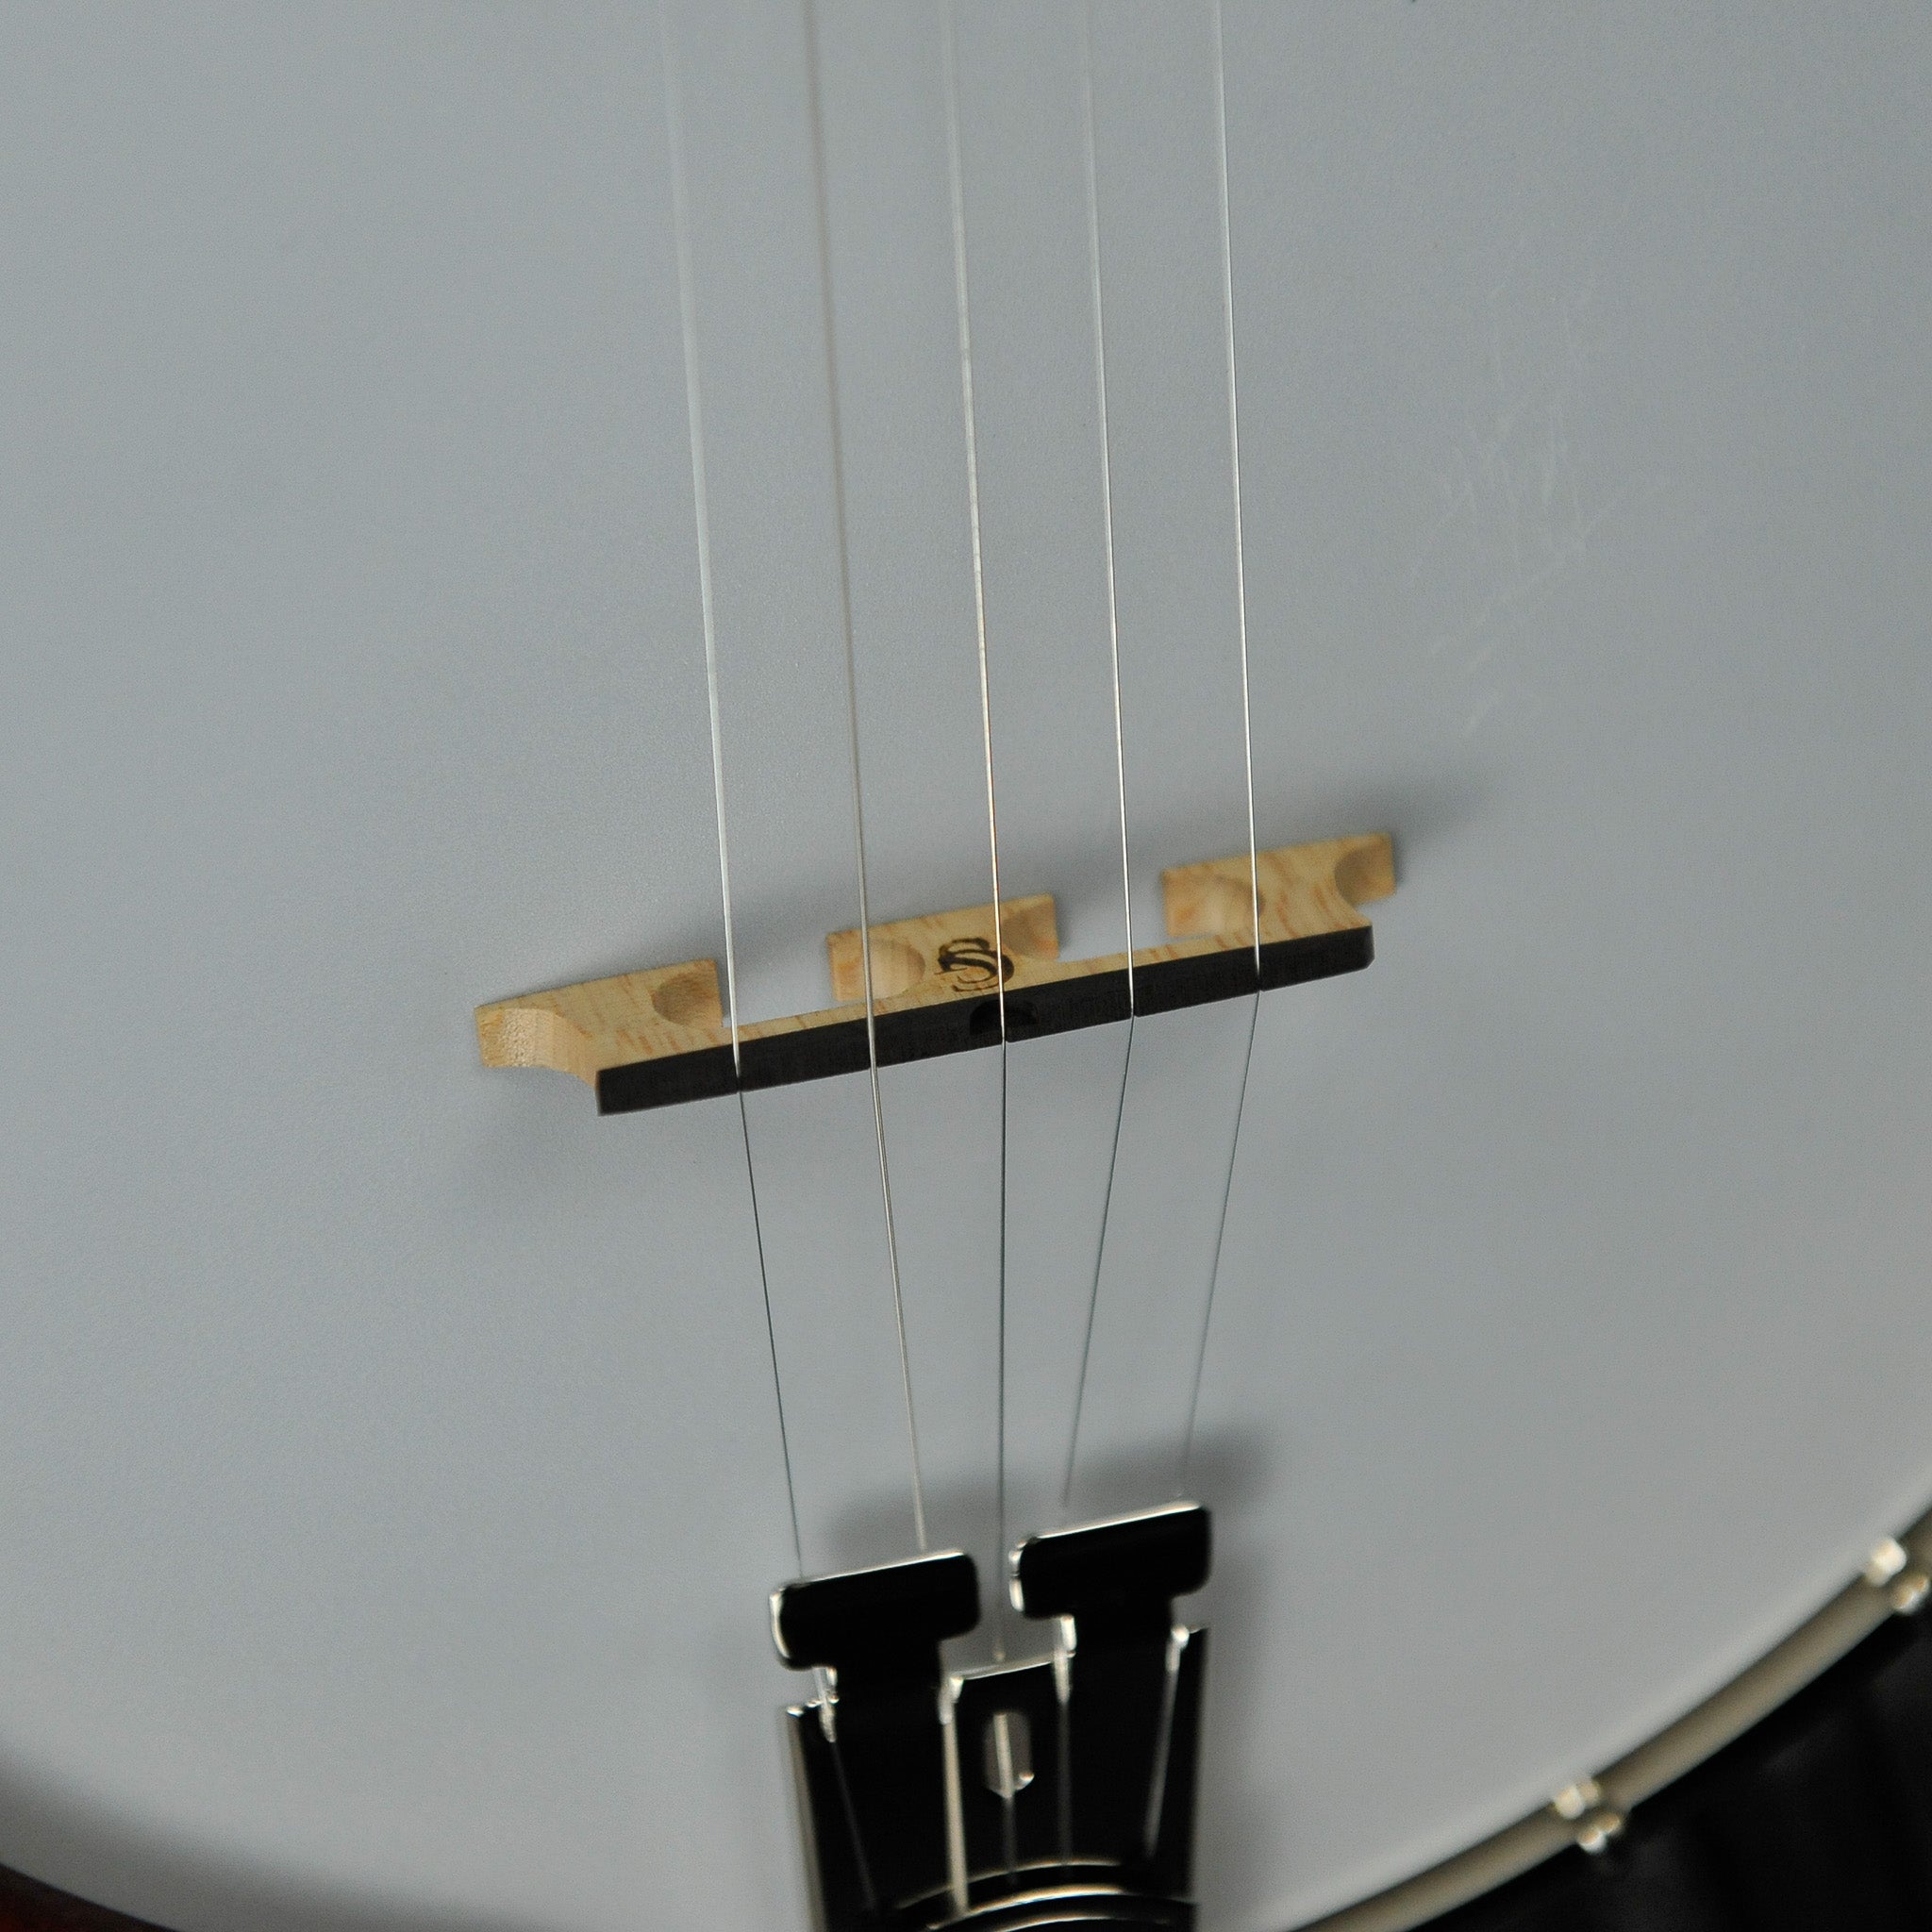 Ome Southern Cross Resonator 5 string  Banjo